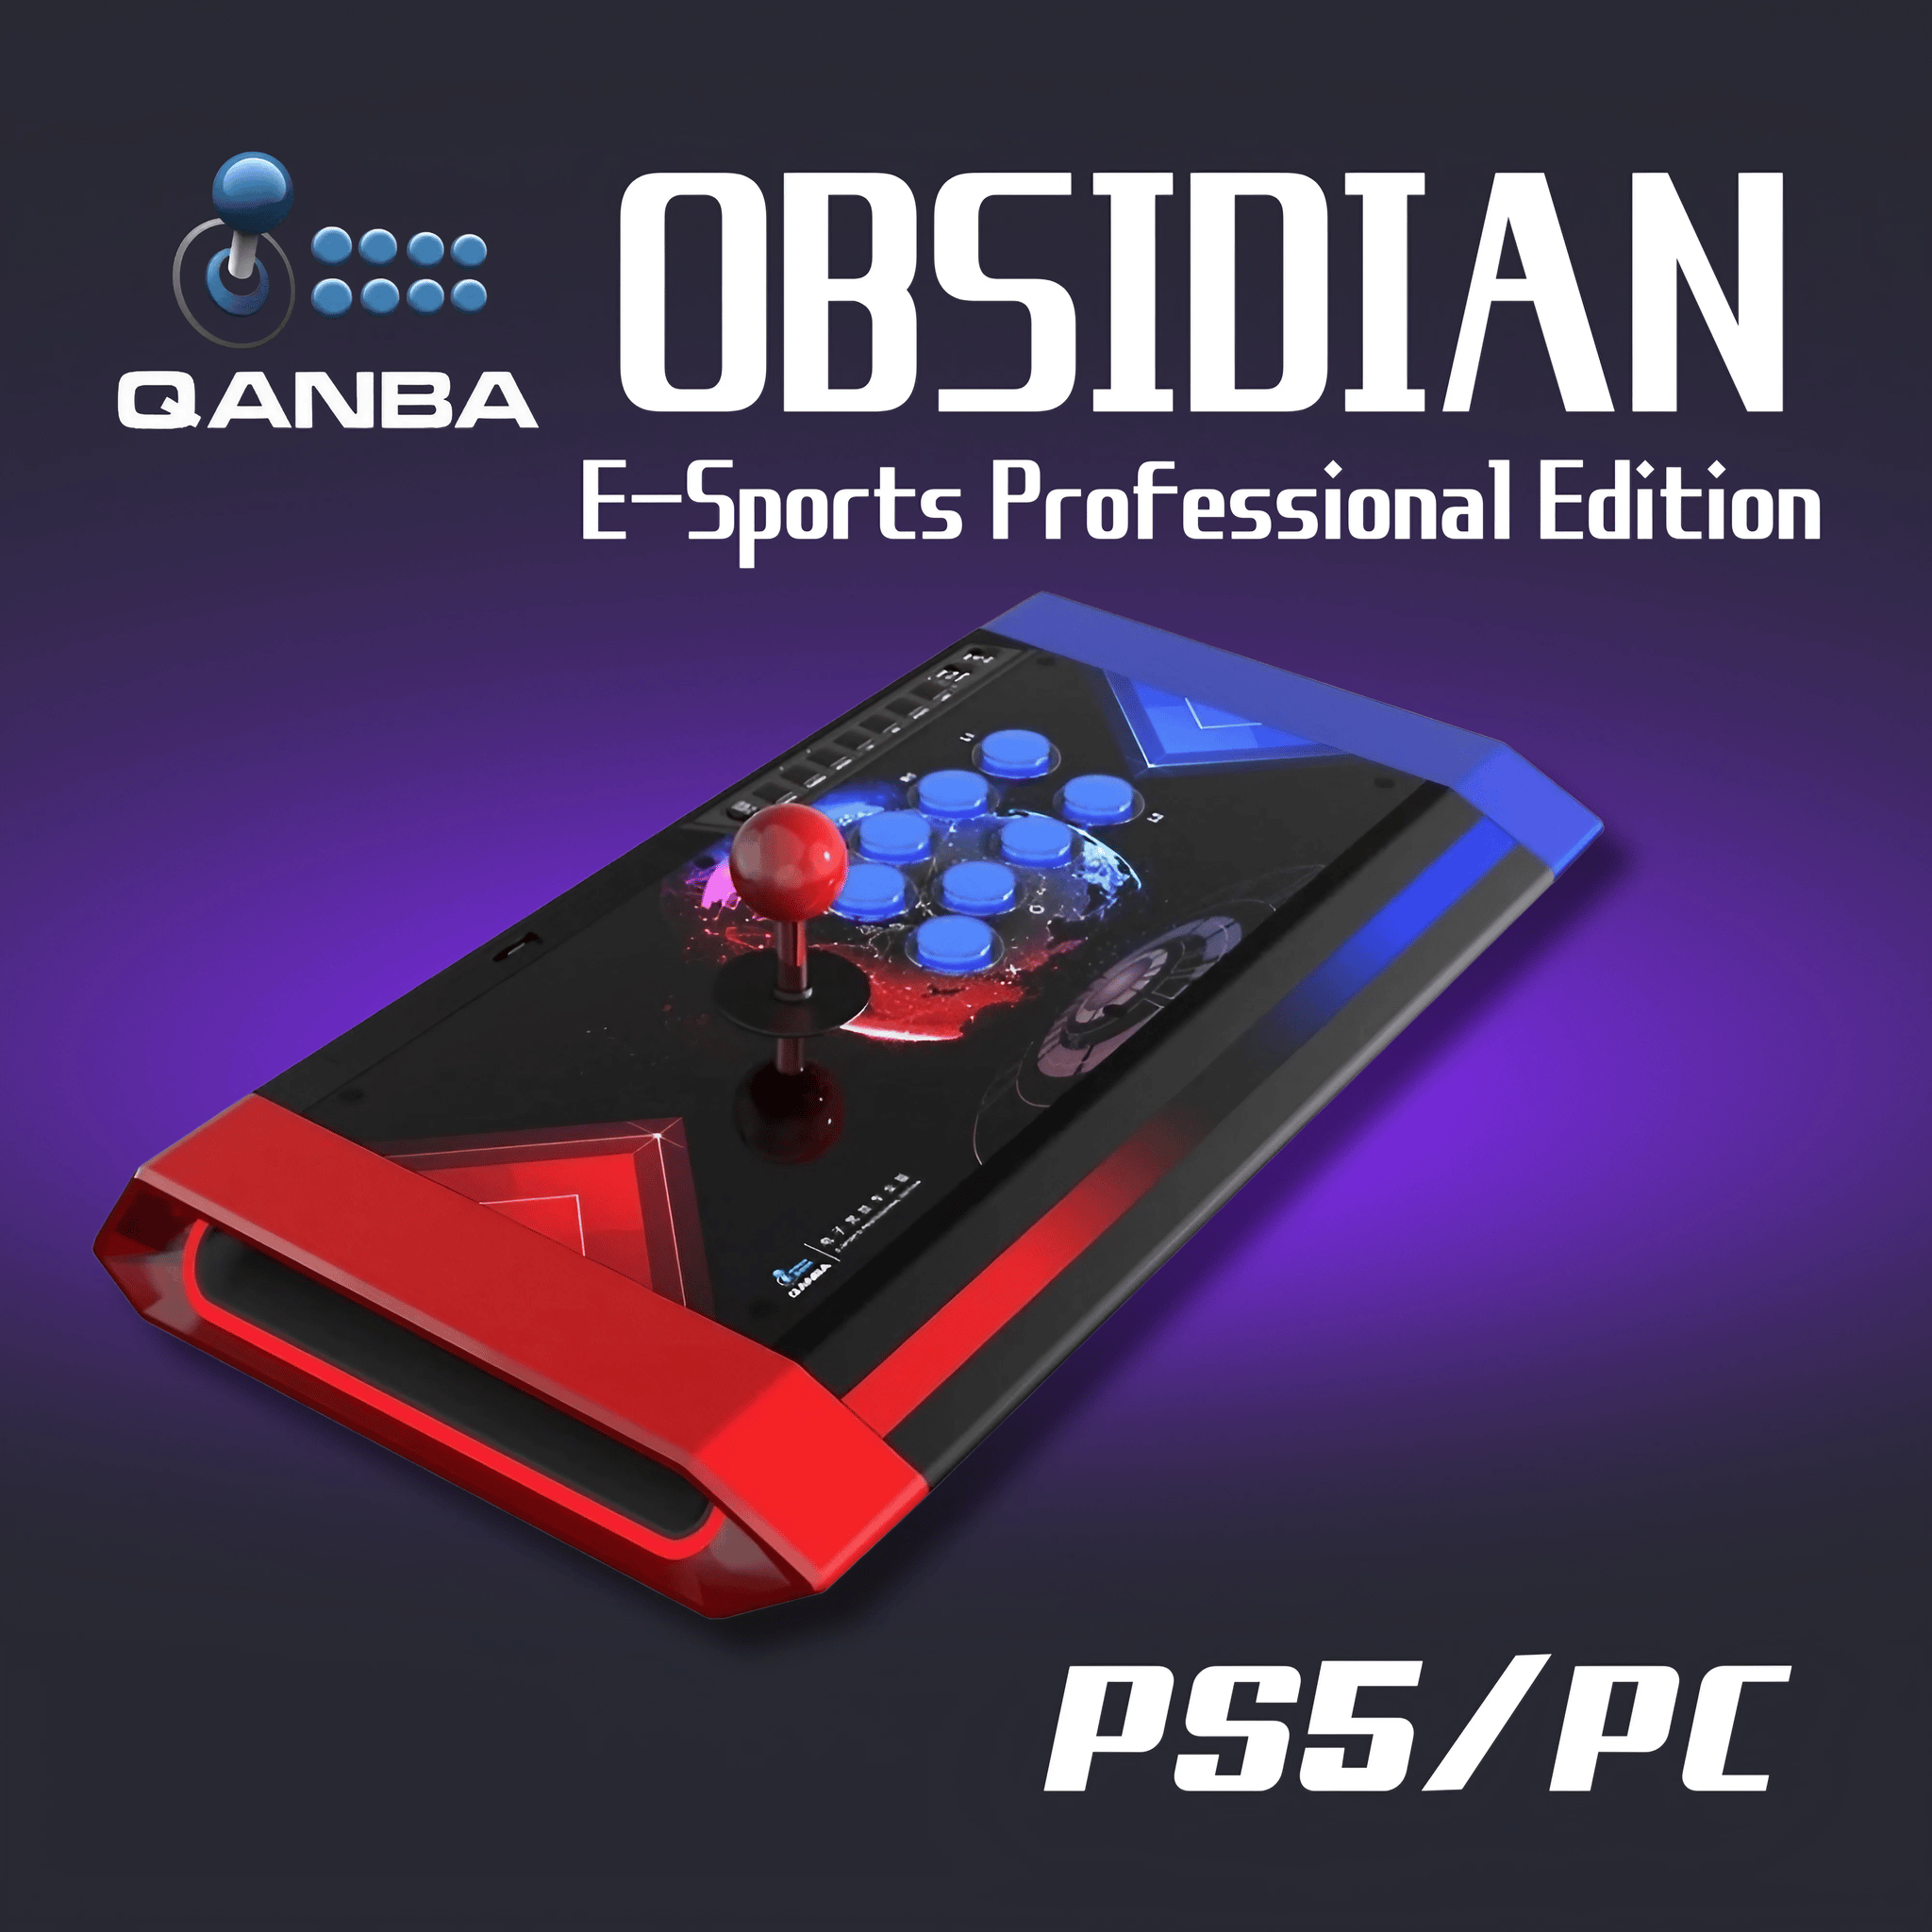 CIELOGAMES】 Qanba Q3 Obsidian E-Sports Professional Edition